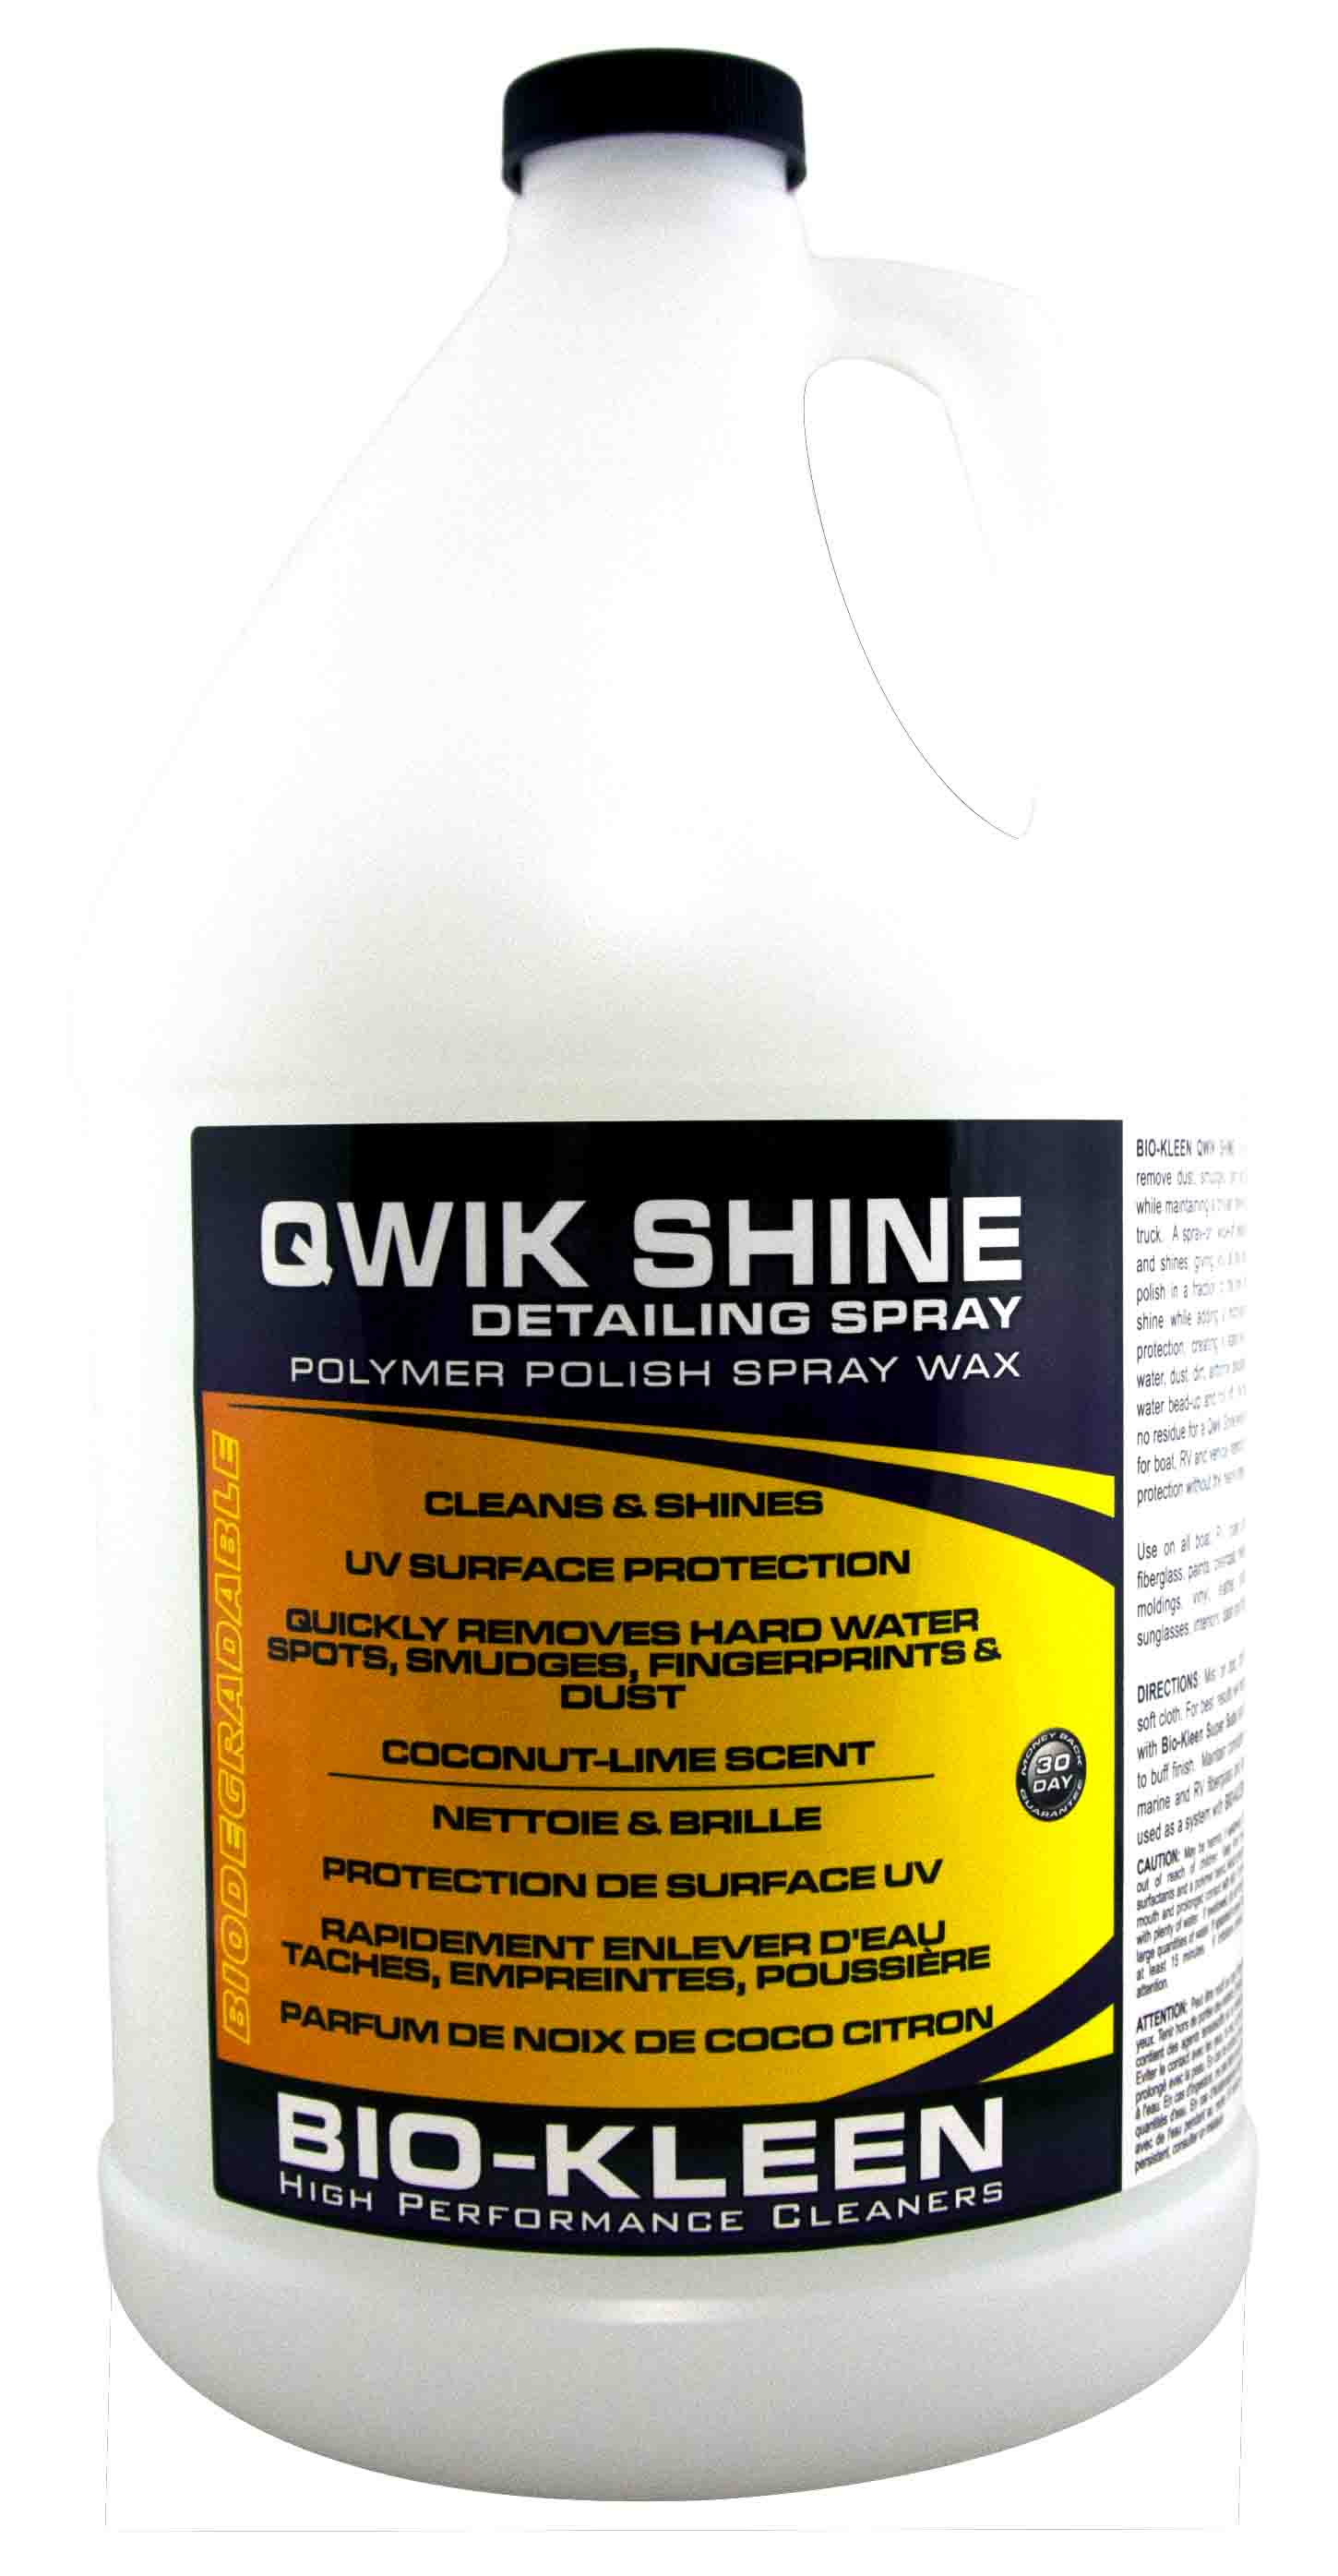 Spray Wax - Detailing Spray - Bio-Kleen Qwik Shine